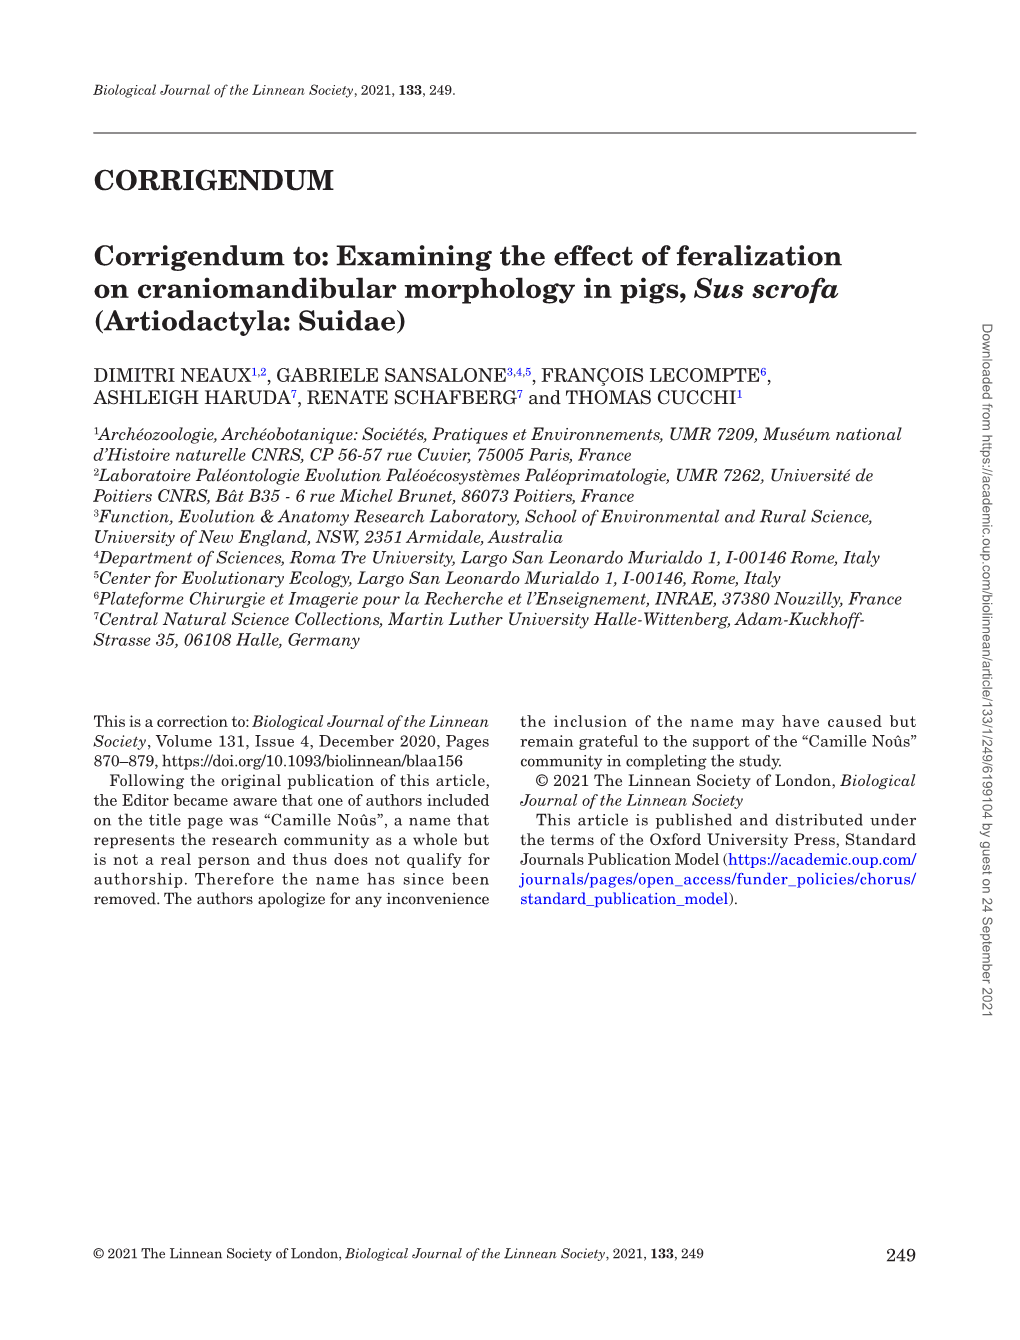 Corrigendum To: Examining the Effect of Feralization on Craniomandibular Morphology in Pigs, Sus Scrofa